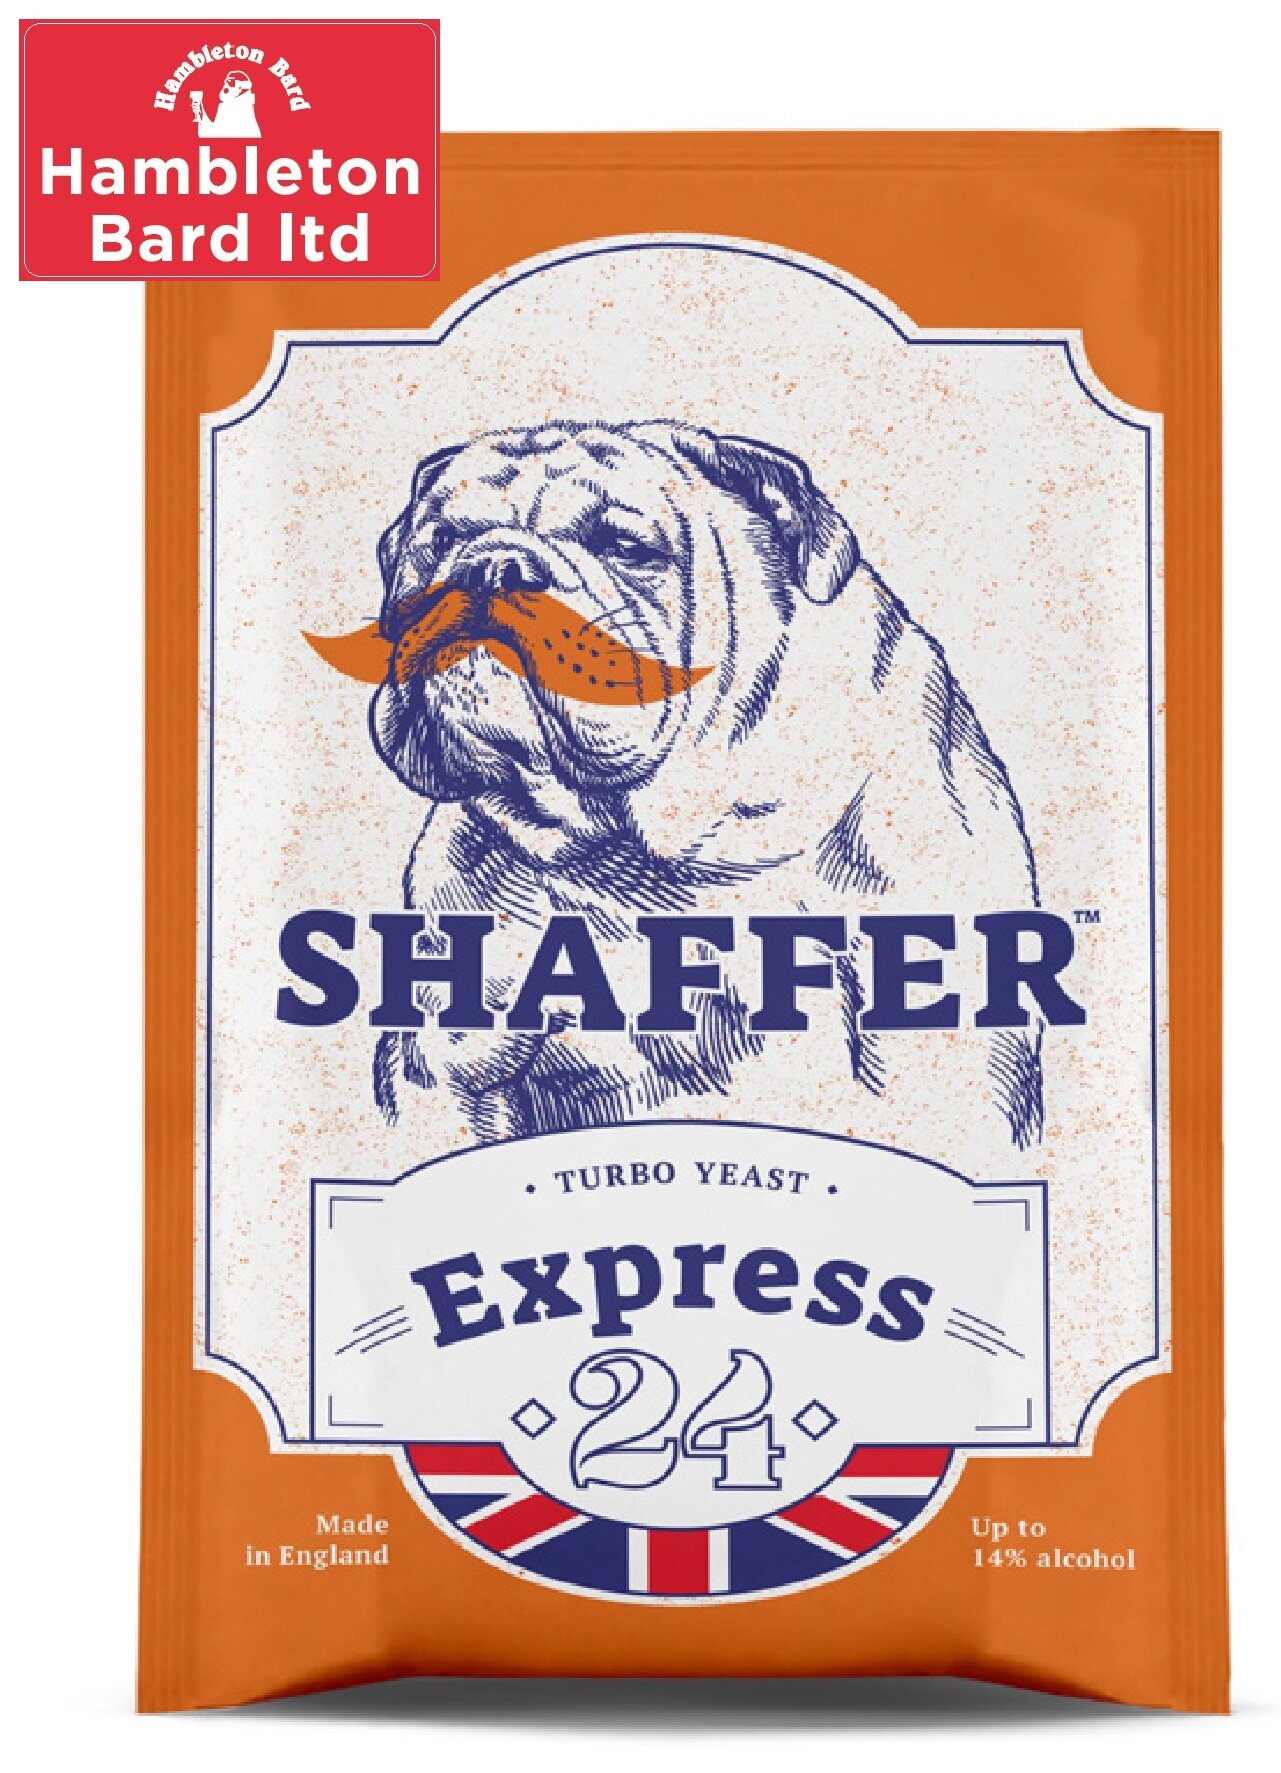 Дрожжи спиртовые SHAFFER 24 Express Turbo, 1 упаковка